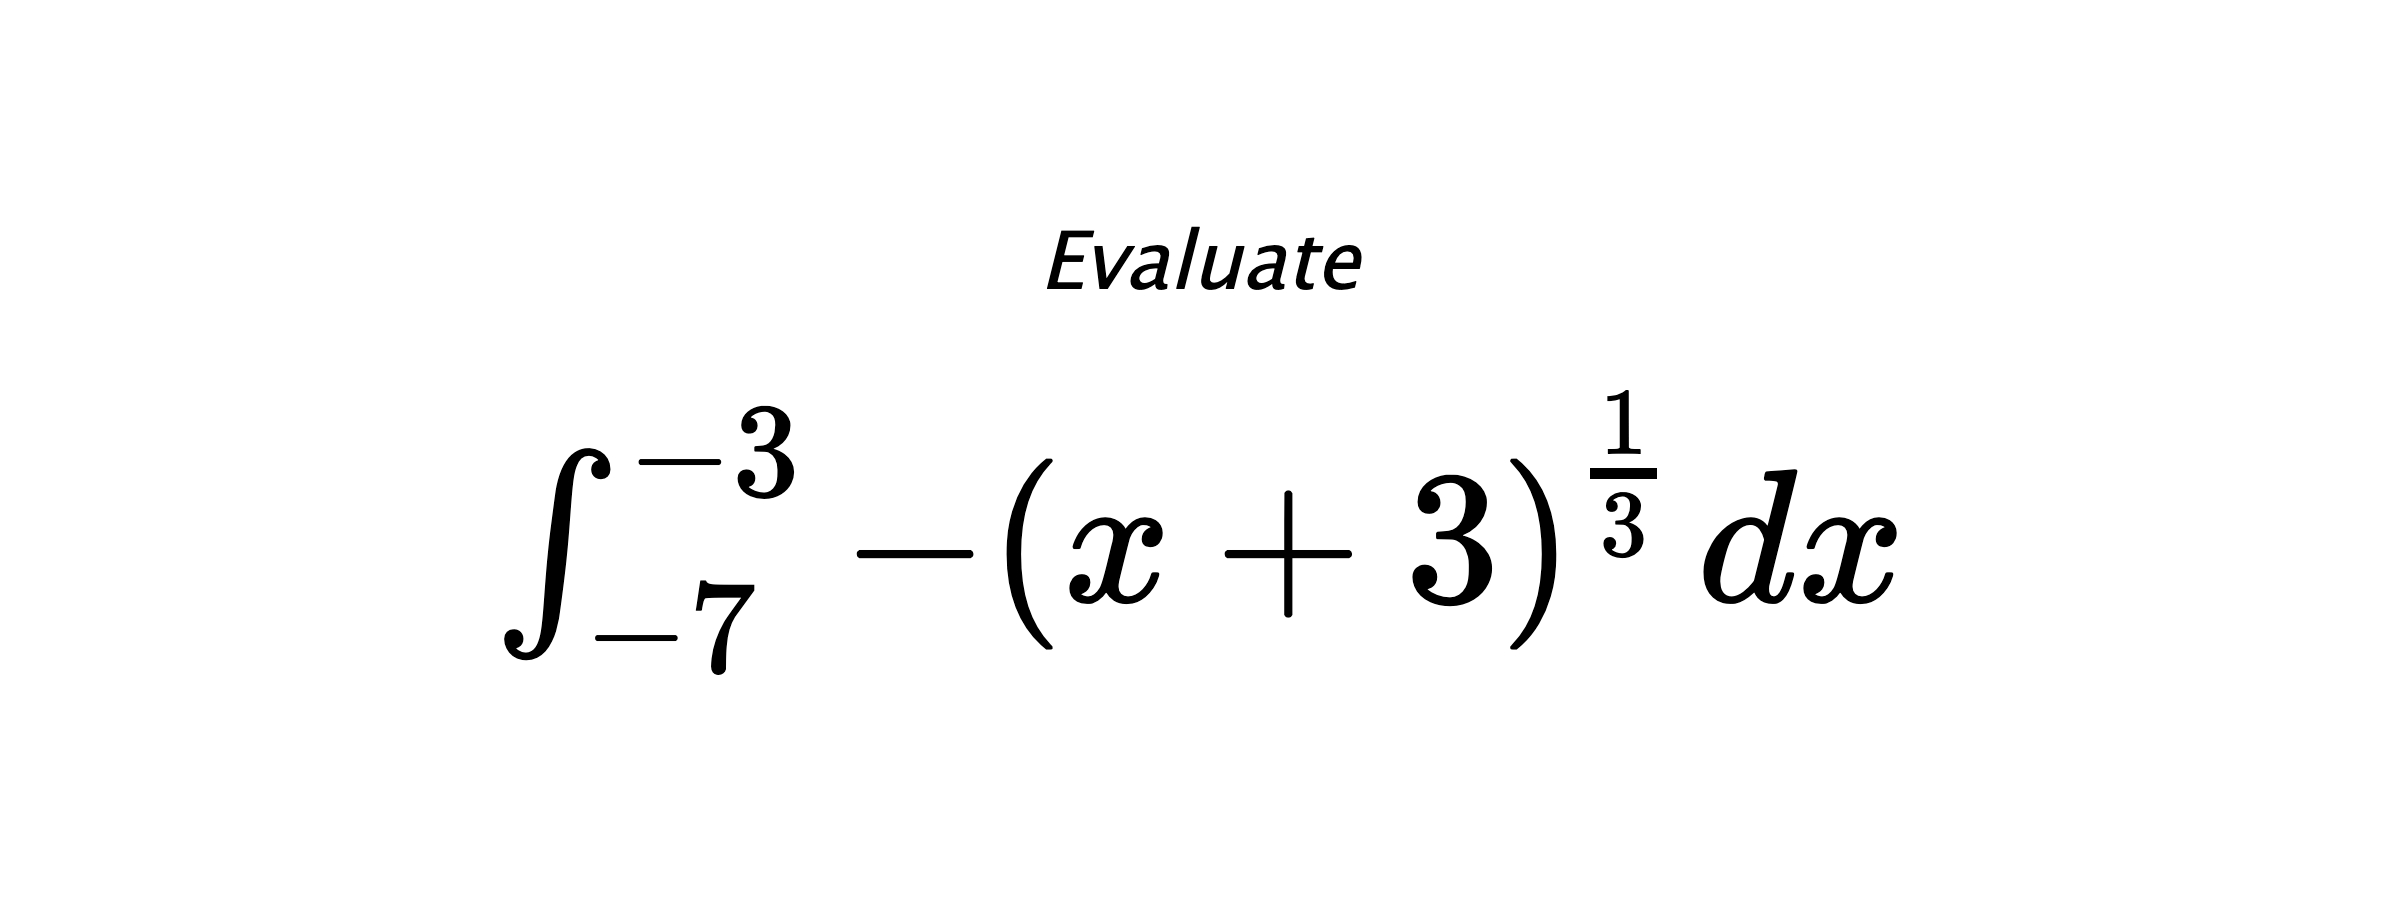 Evaluate $ \int_{-7}^{-3} -\left(x+3\right)^{\frac{1}{3}} \hspace{0.2cm} dx $